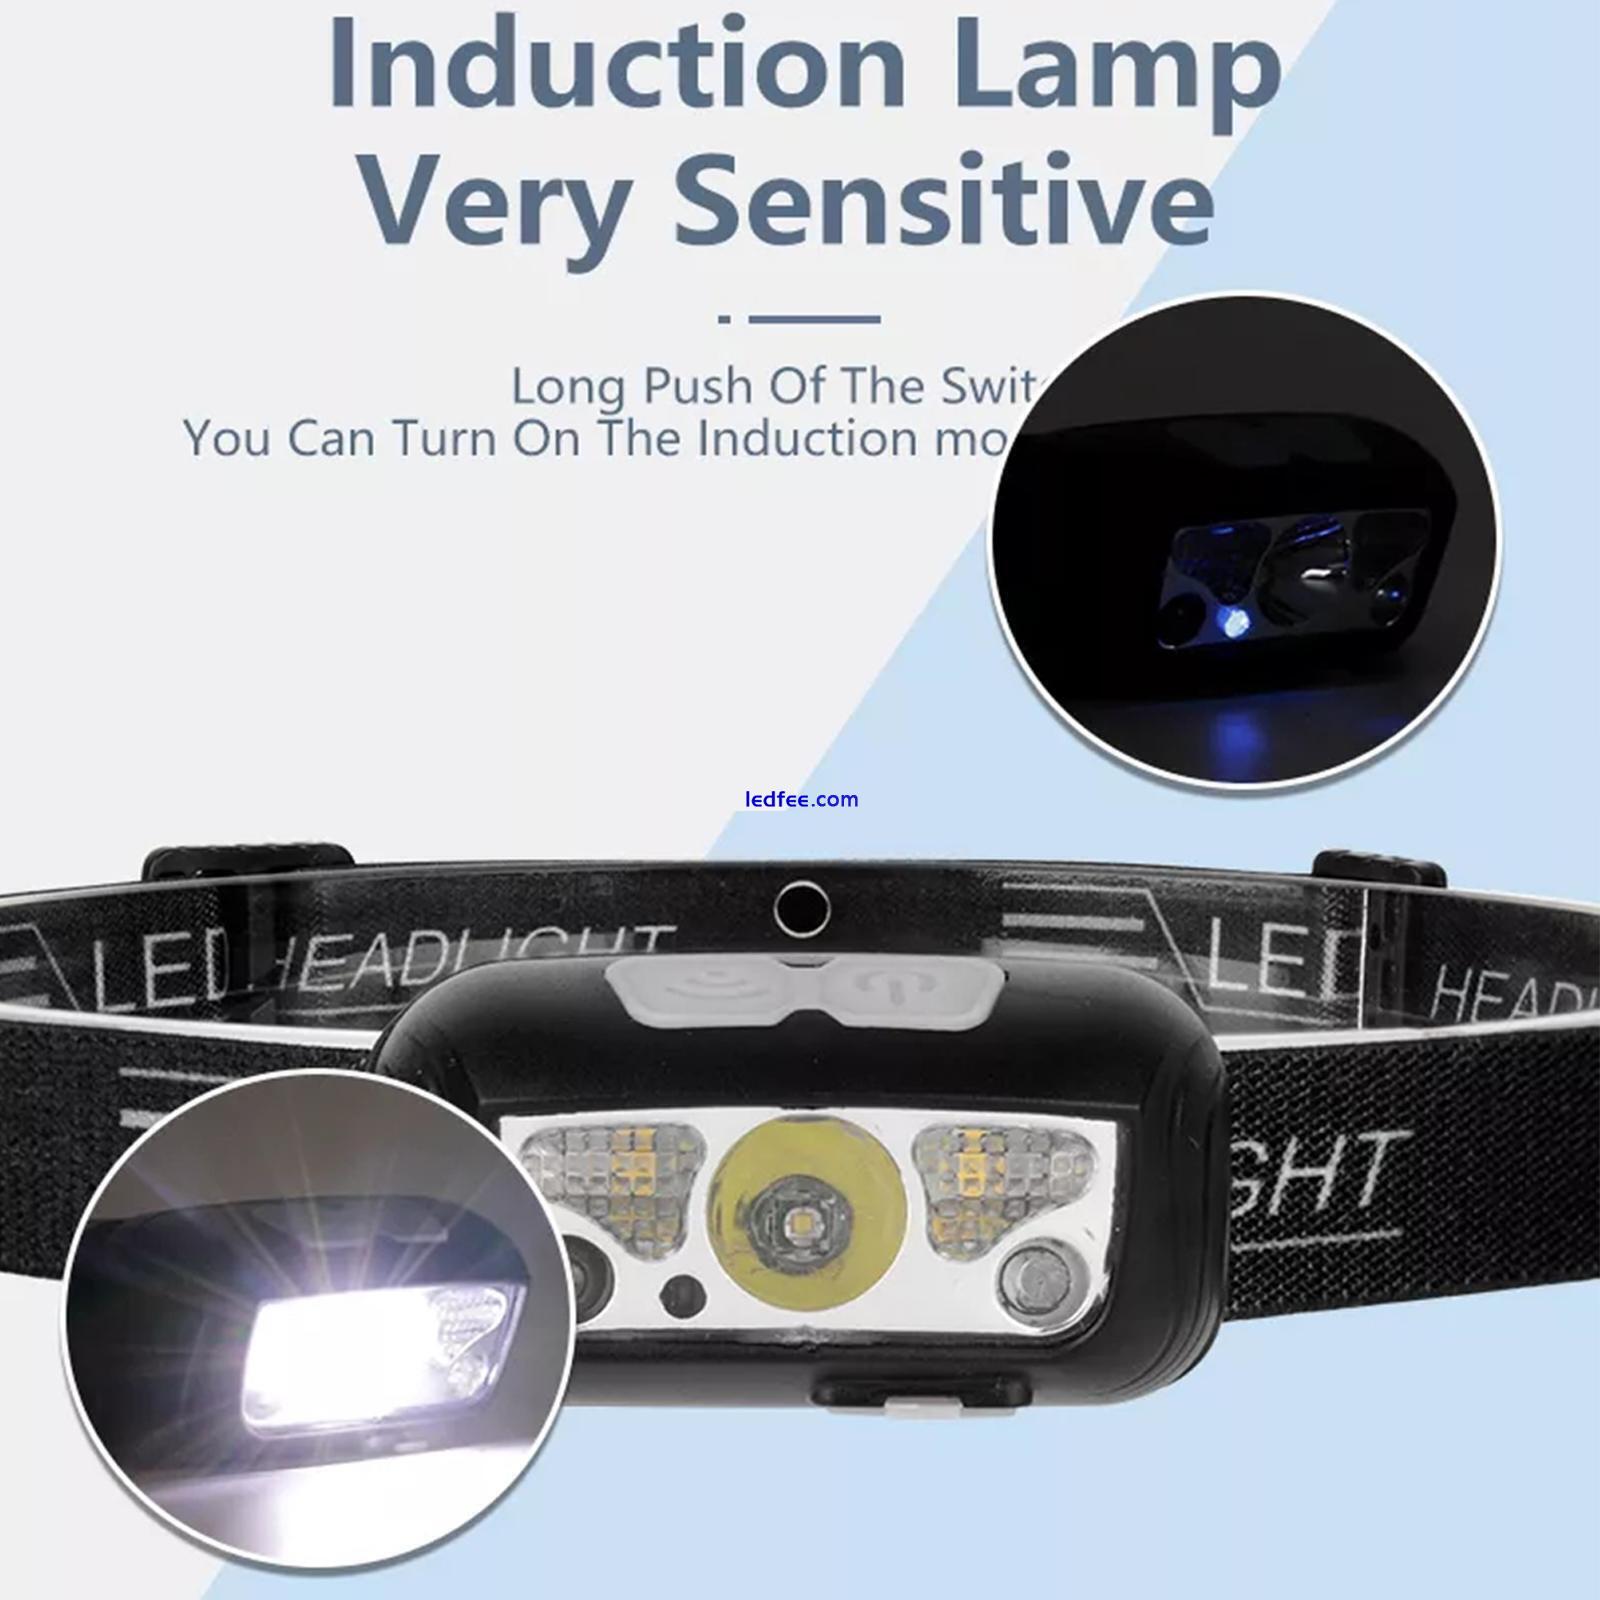 LED Headlamp Headlight Torch USB Rechargeable Flashlight Work A3U2 2 